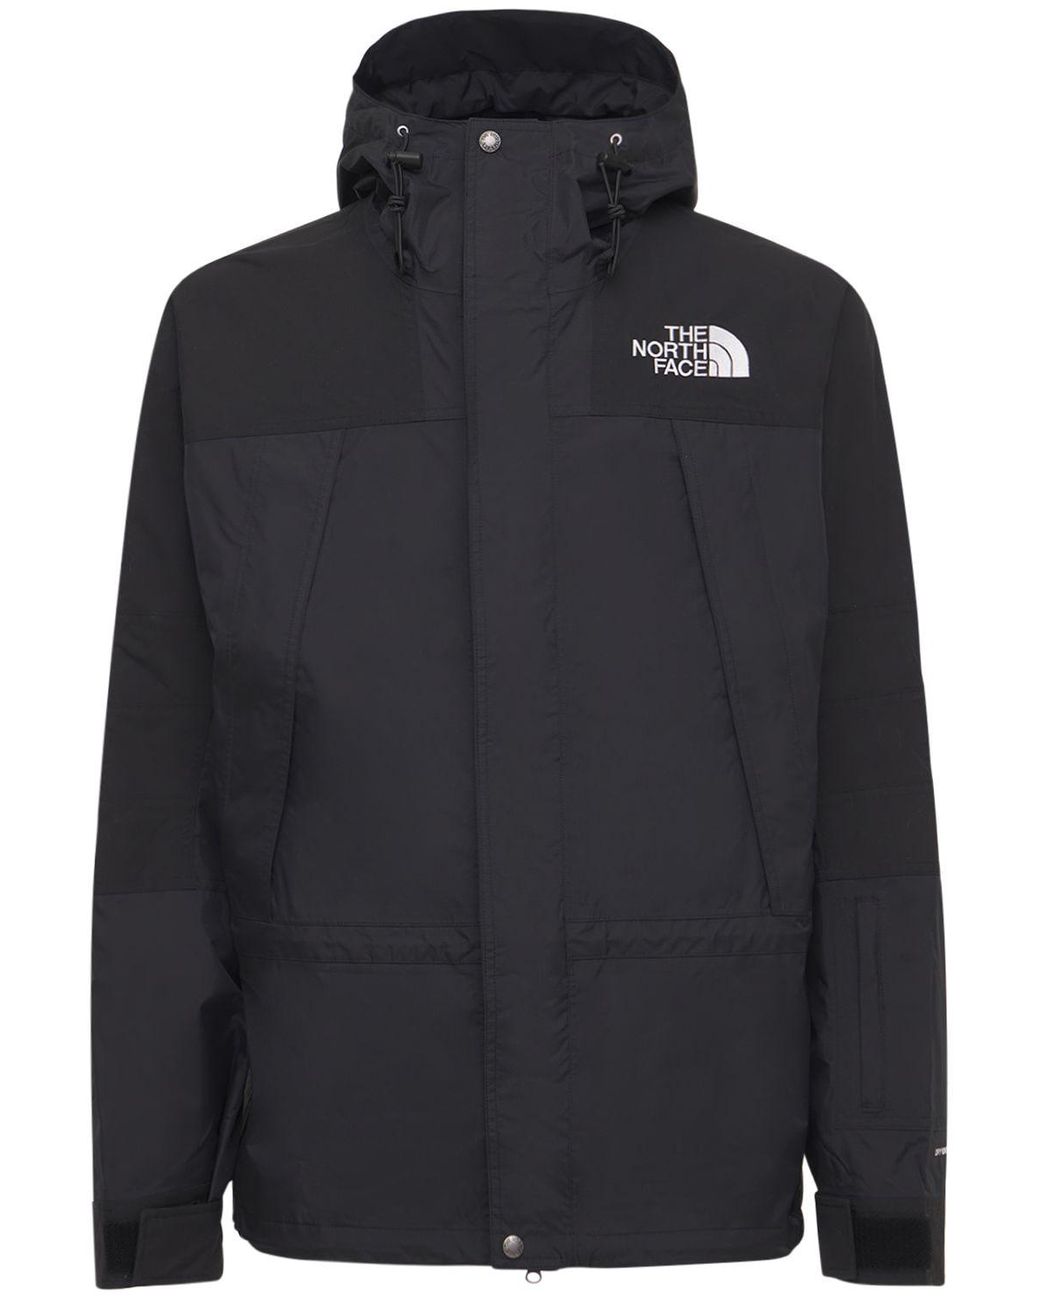 The North Face Karakoram Dryvent Jacket in Black for Men - Lyst